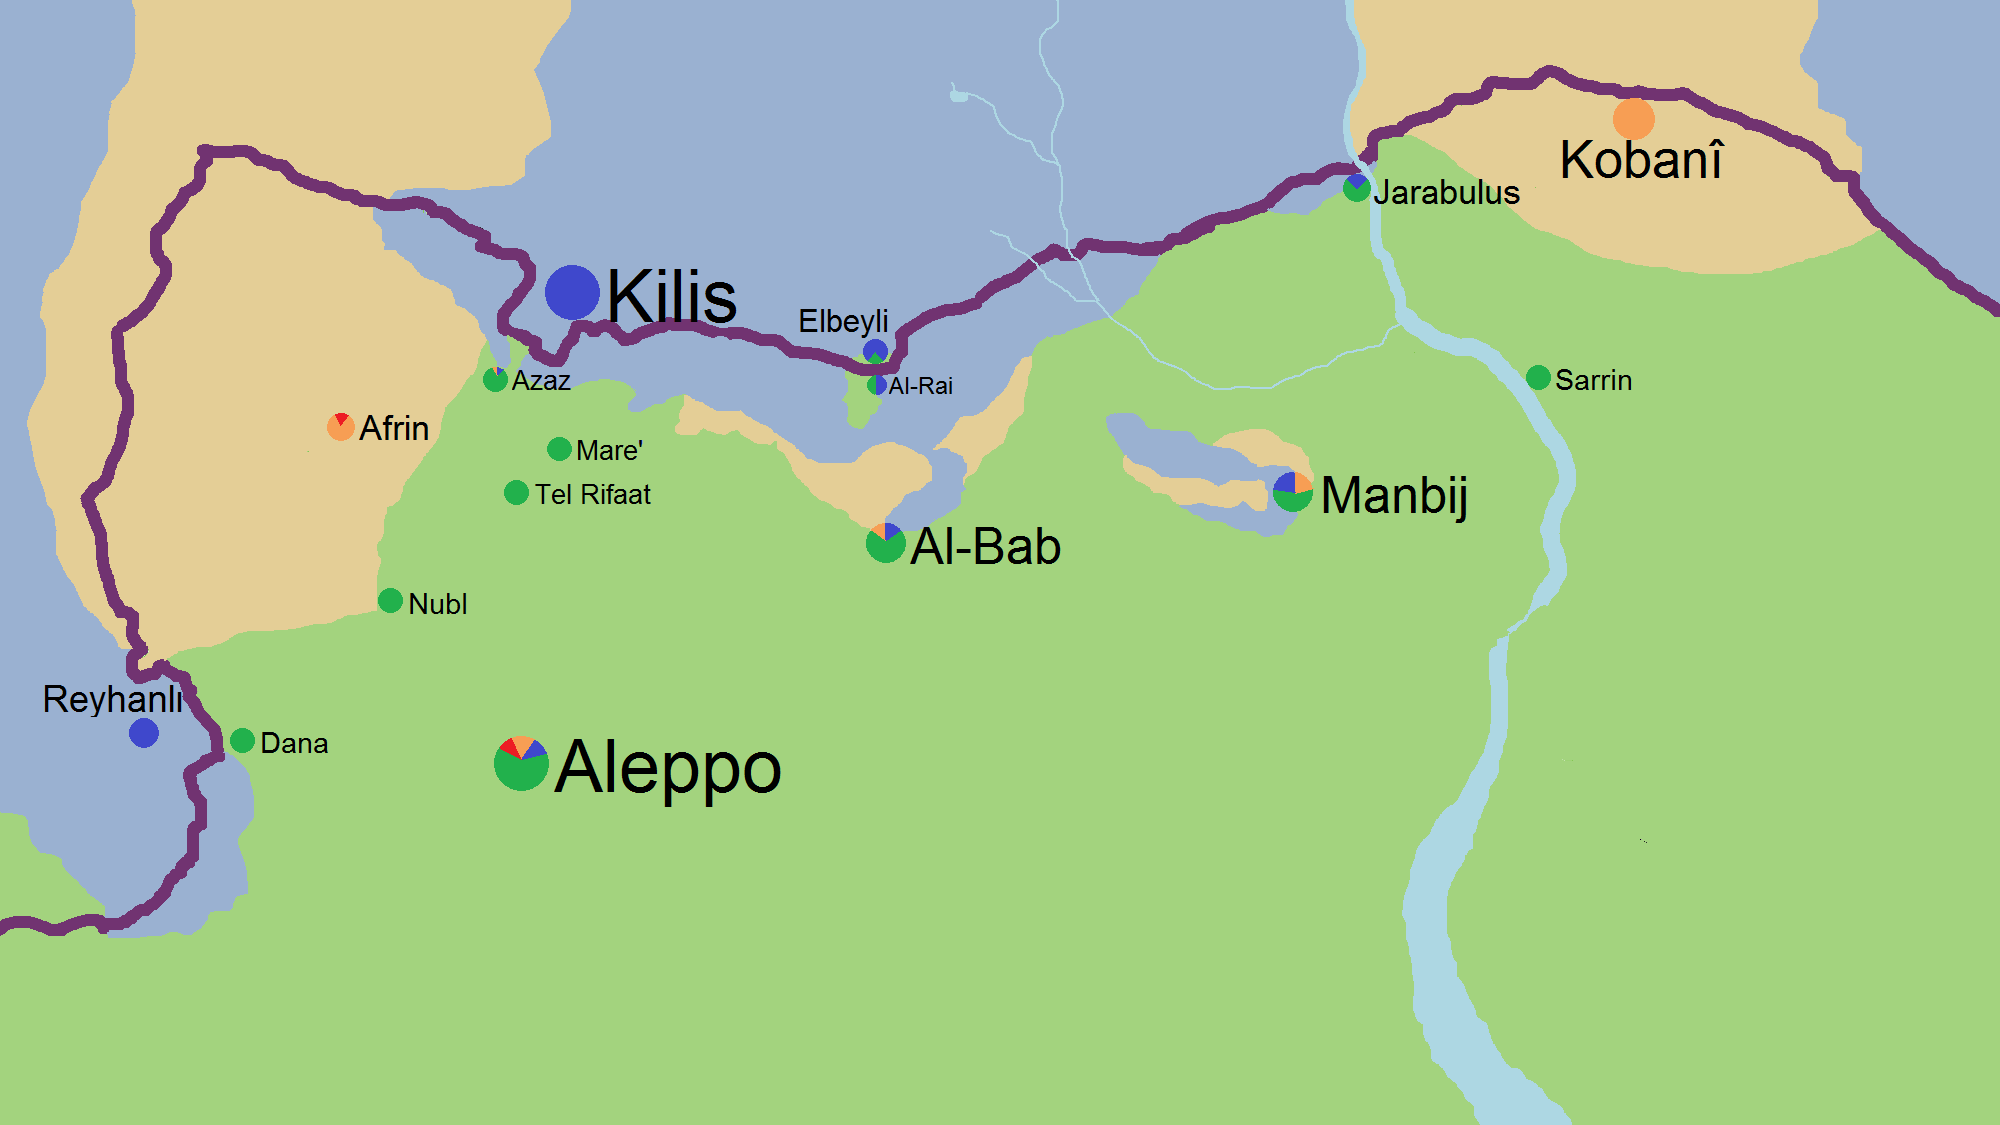 Aleppo PNG - 114183